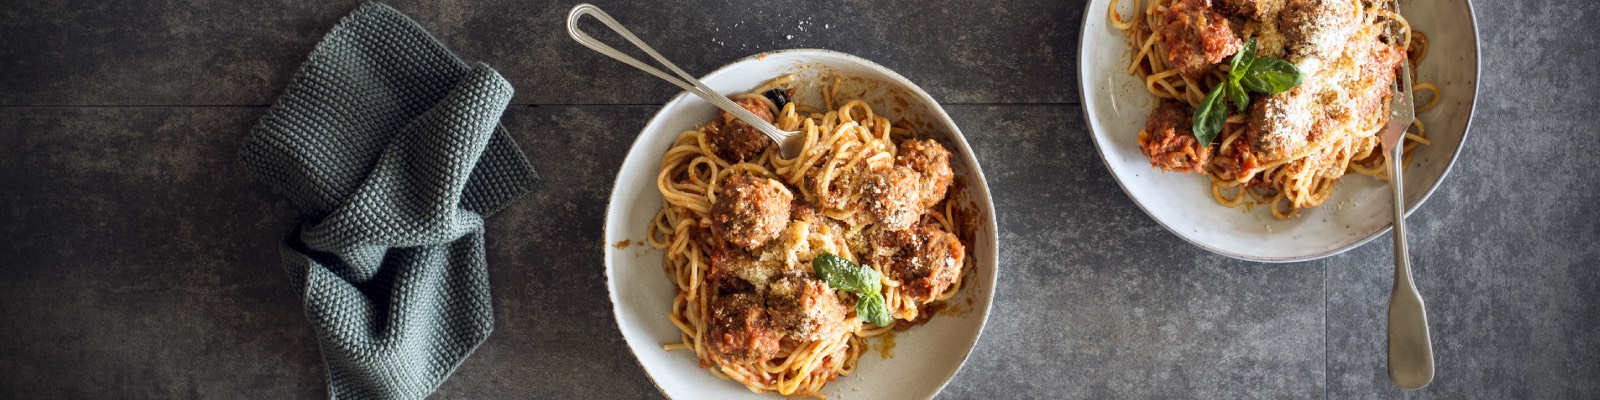 Pasta Garofalo - Spaghetti con albóndigas